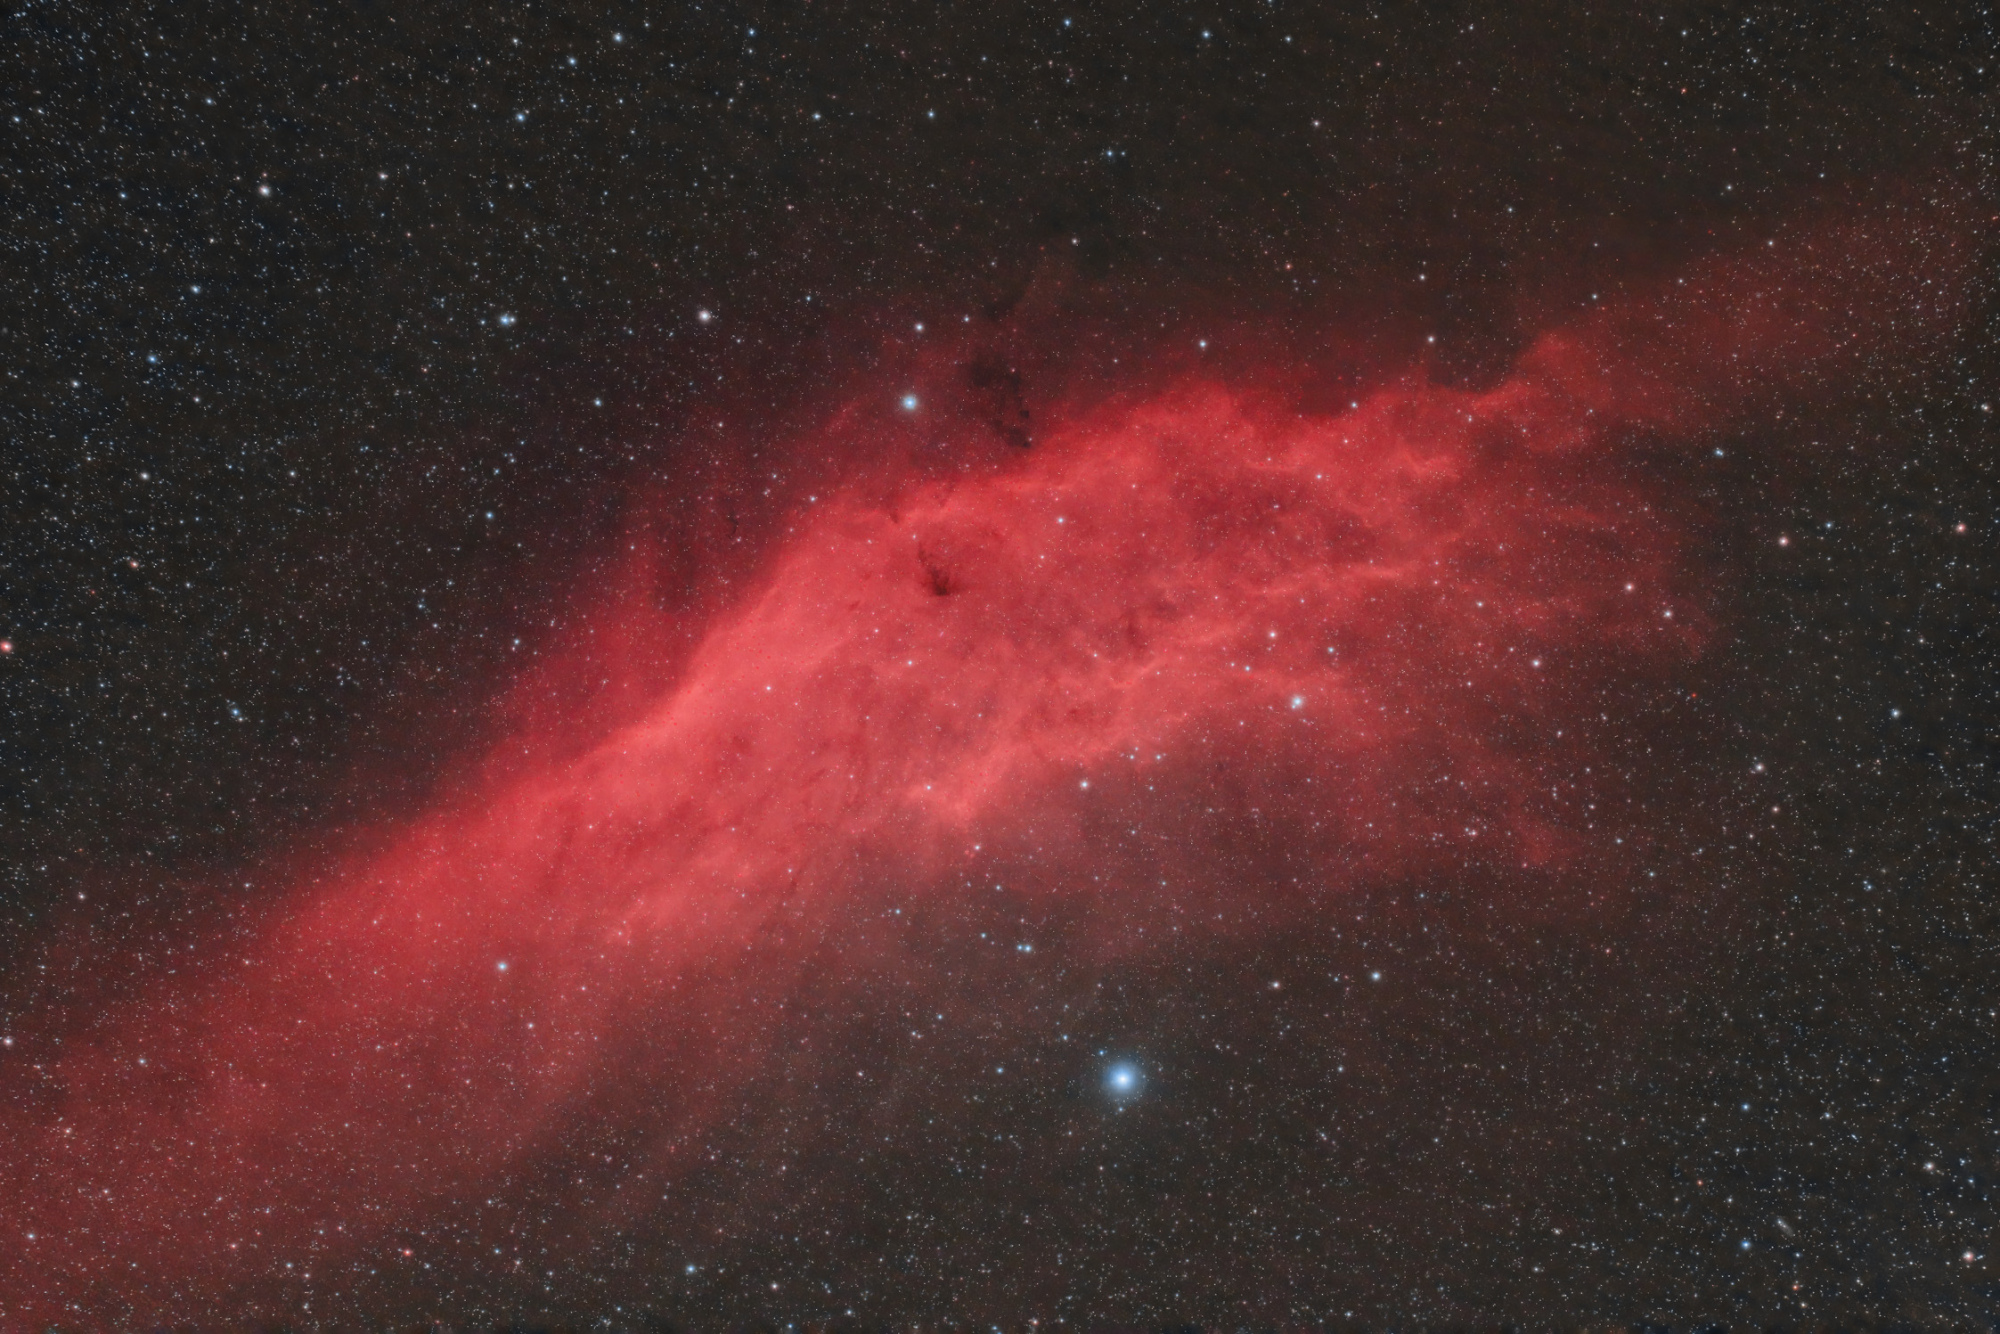 20220105-NGC1499-NEBULEUSE-CALIFORNIE-TS70ED-L-eNhance-XT1-CR0.79-51X180s-800-DOF-SIRIL-PS-2-50.thumb.jpg.2cfffb177c6c53bae704603ff7533e0d.jpg